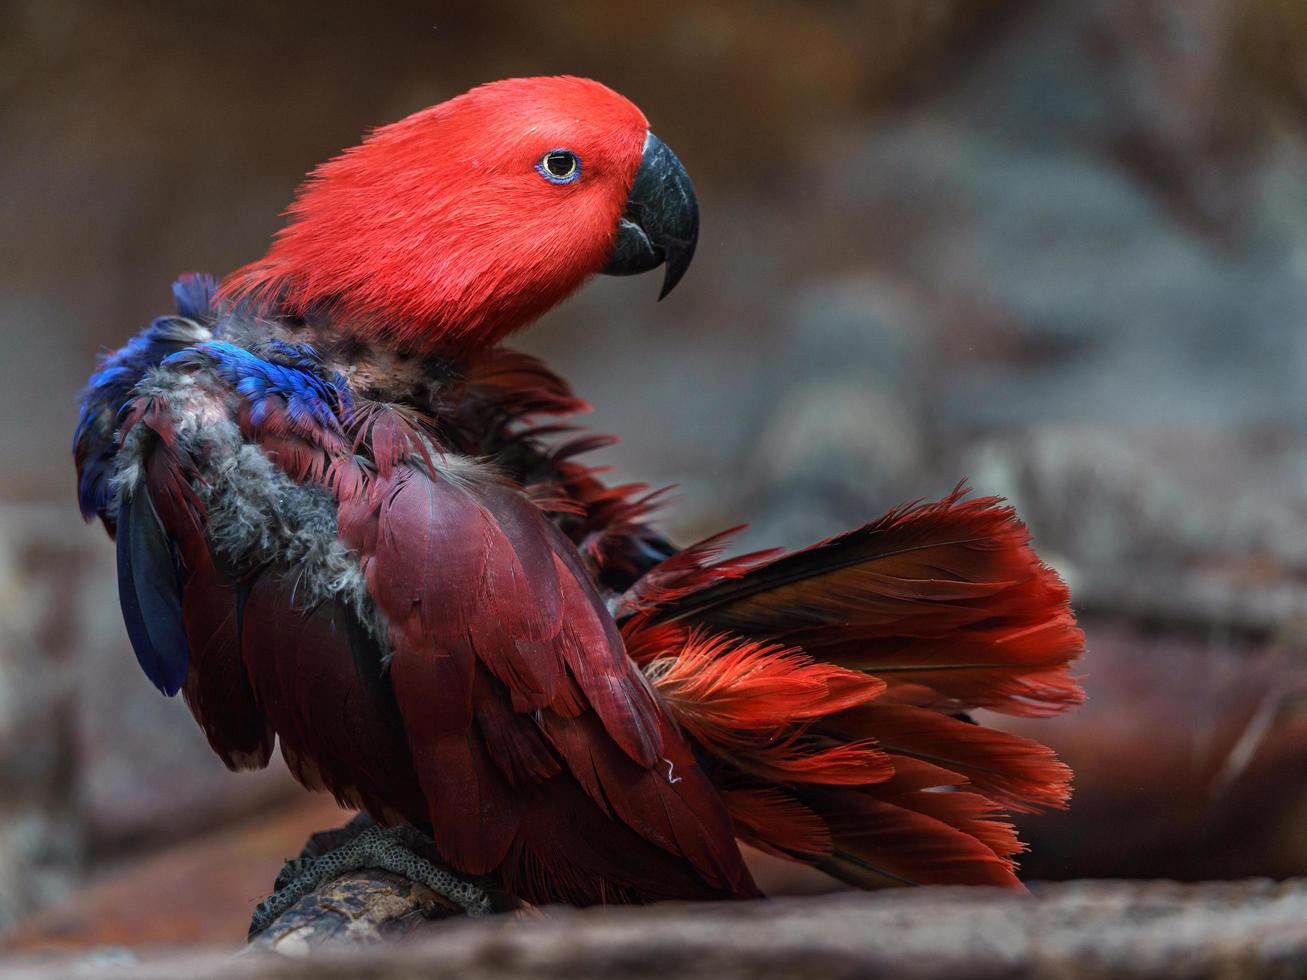 eklektus papegoja i Zoo foto